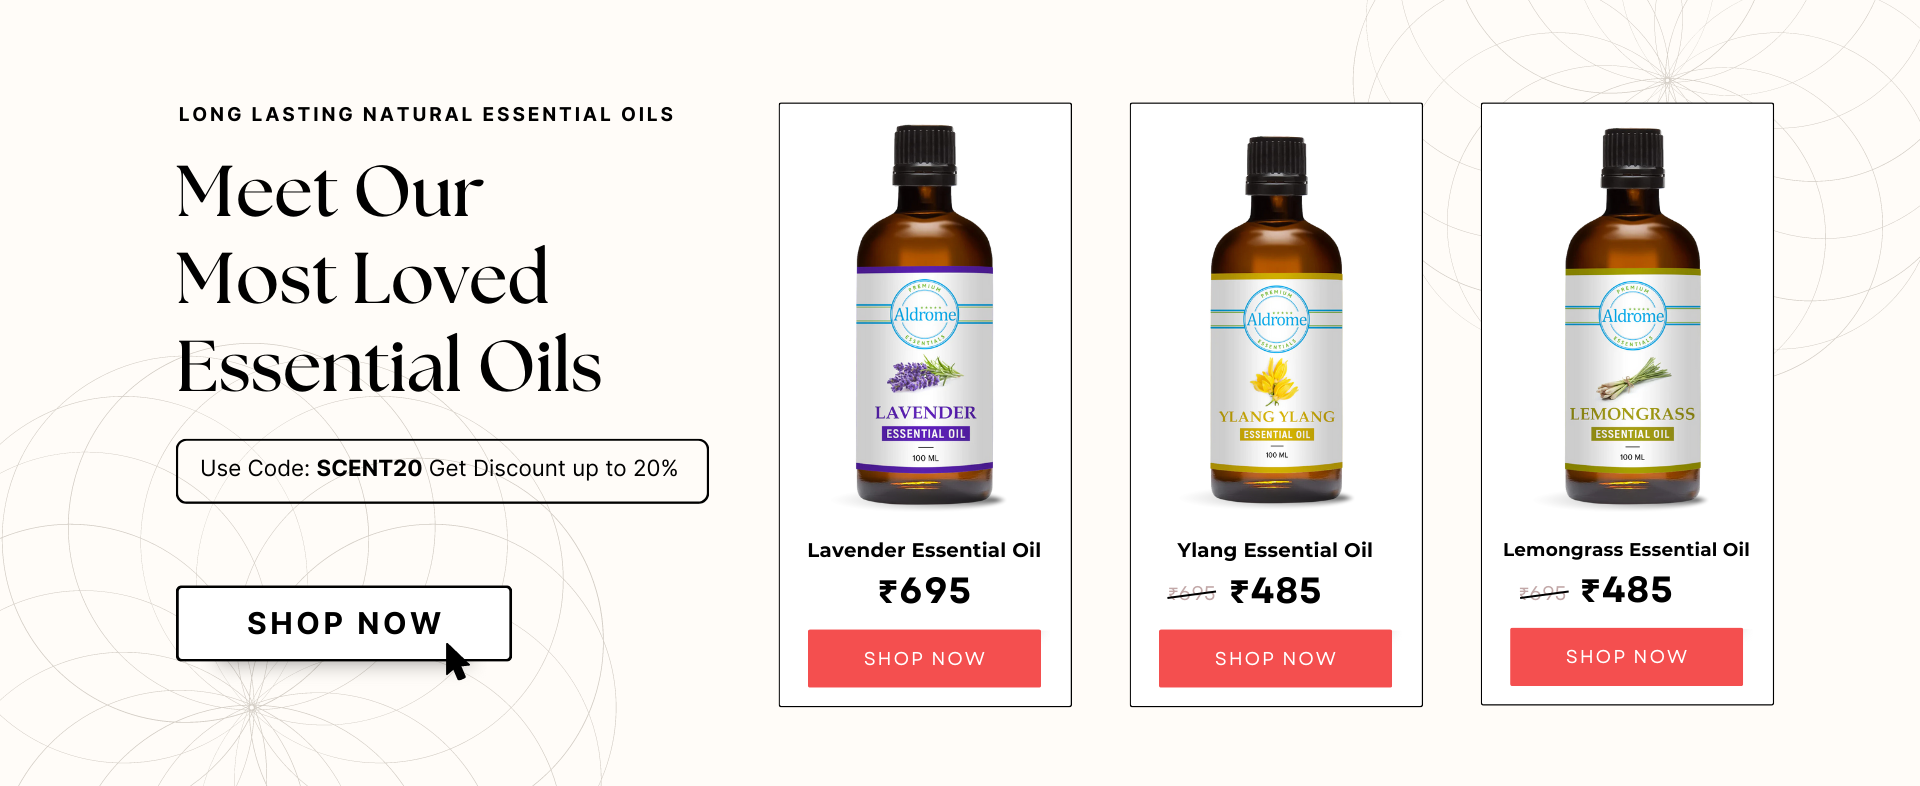 Rose Fragrance Oil - 100ml  Buy Scented Oils Online at Best Prices –  Aldrome